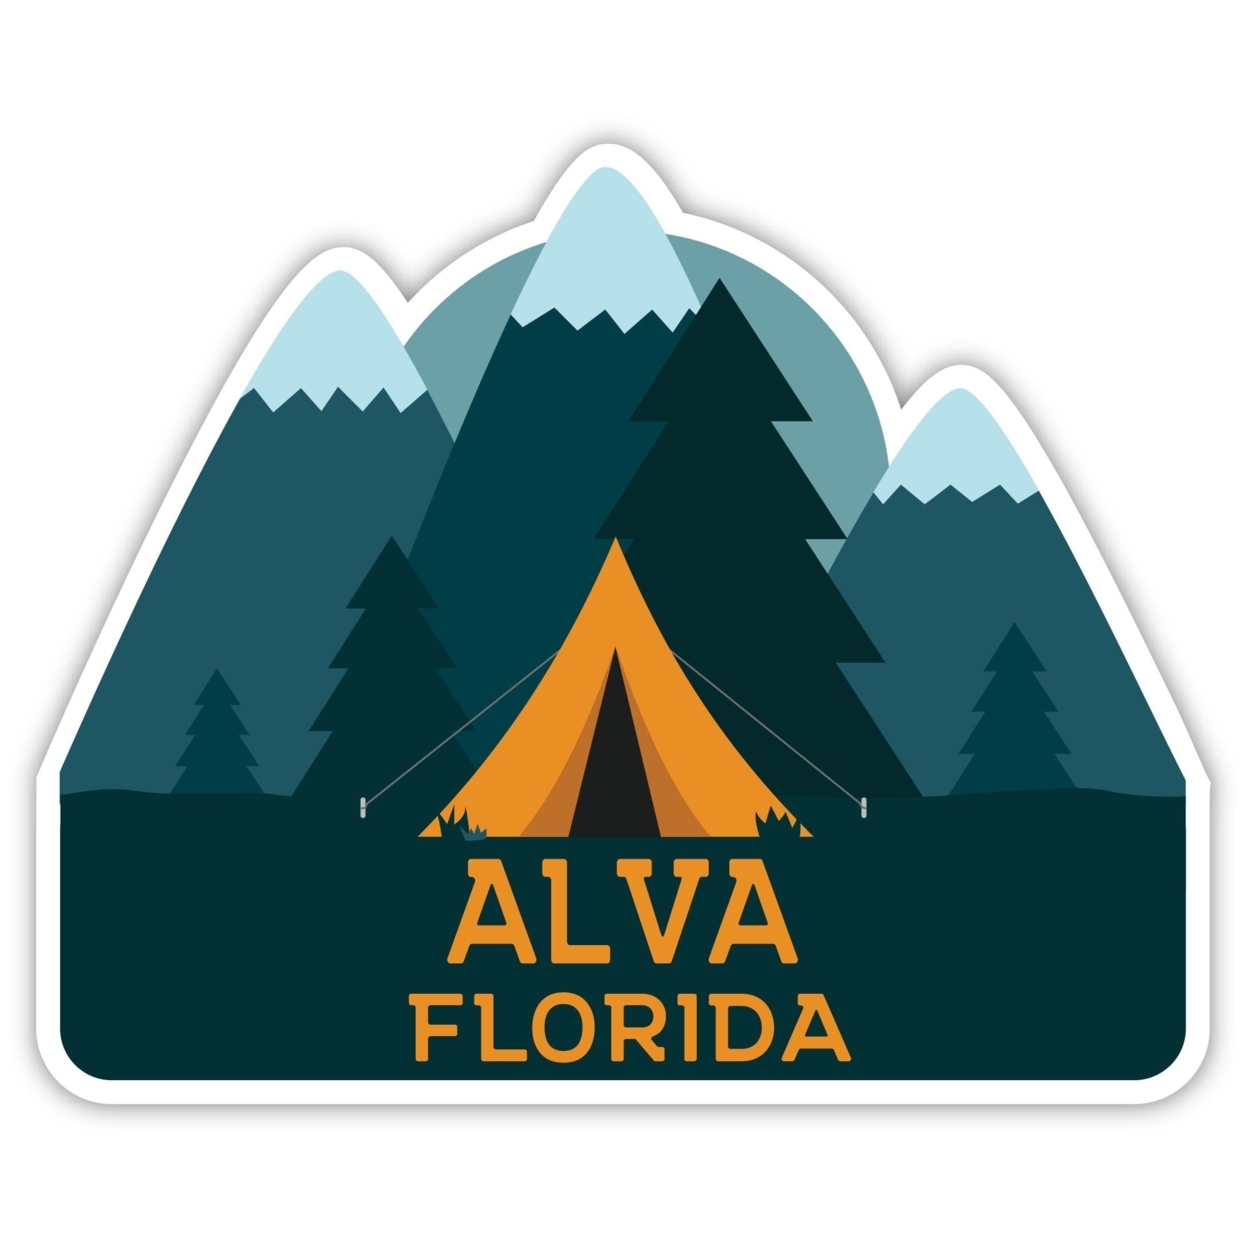 Alva Florida Souvenir Decorative Stickers (Choose Theme And Size) - 4-Pack, 2-Inch, Tent